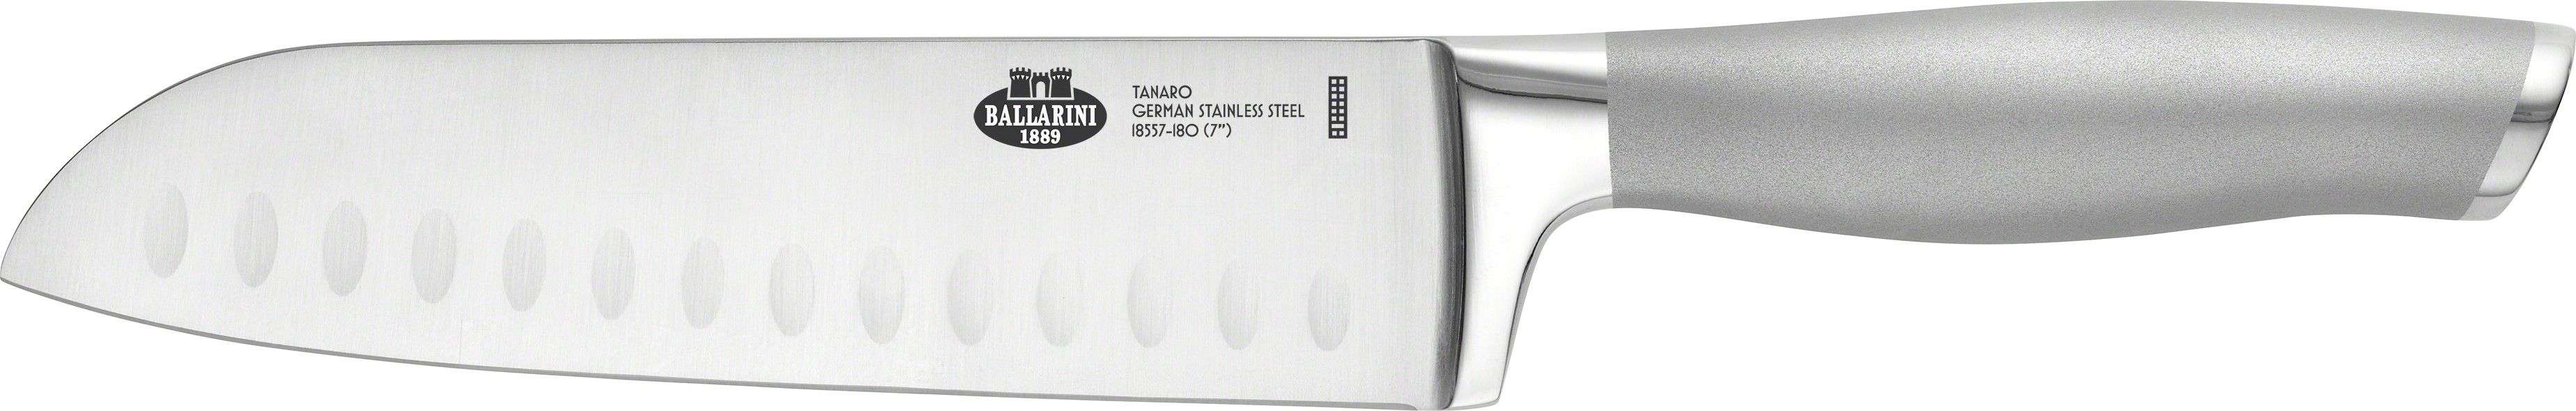 Japonský nůž Santoku Tanaro Ballarini 18 cm - Chefshop.cz